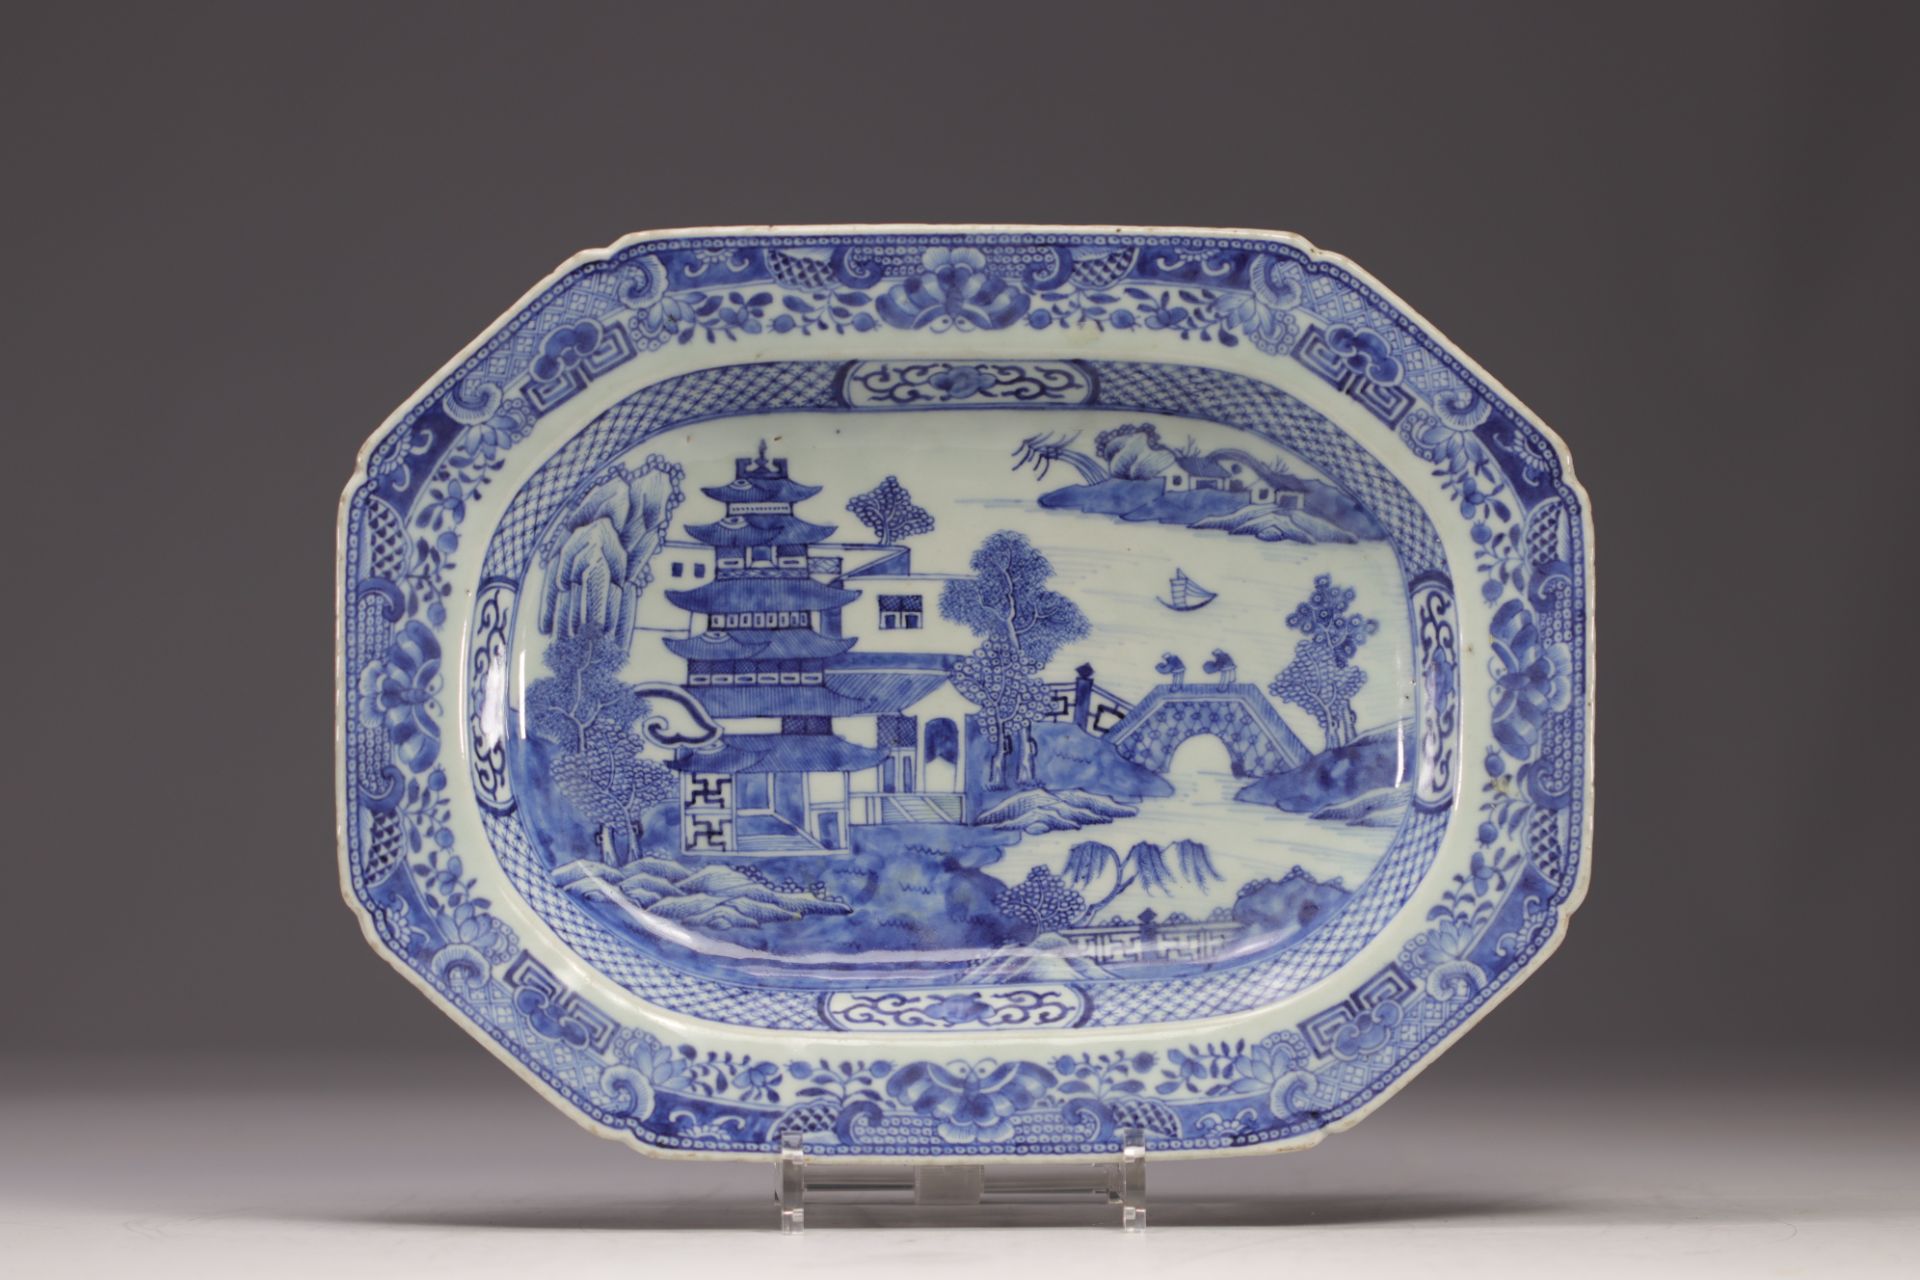 China - White and blue porcelain dish, landscape design, 18th century.